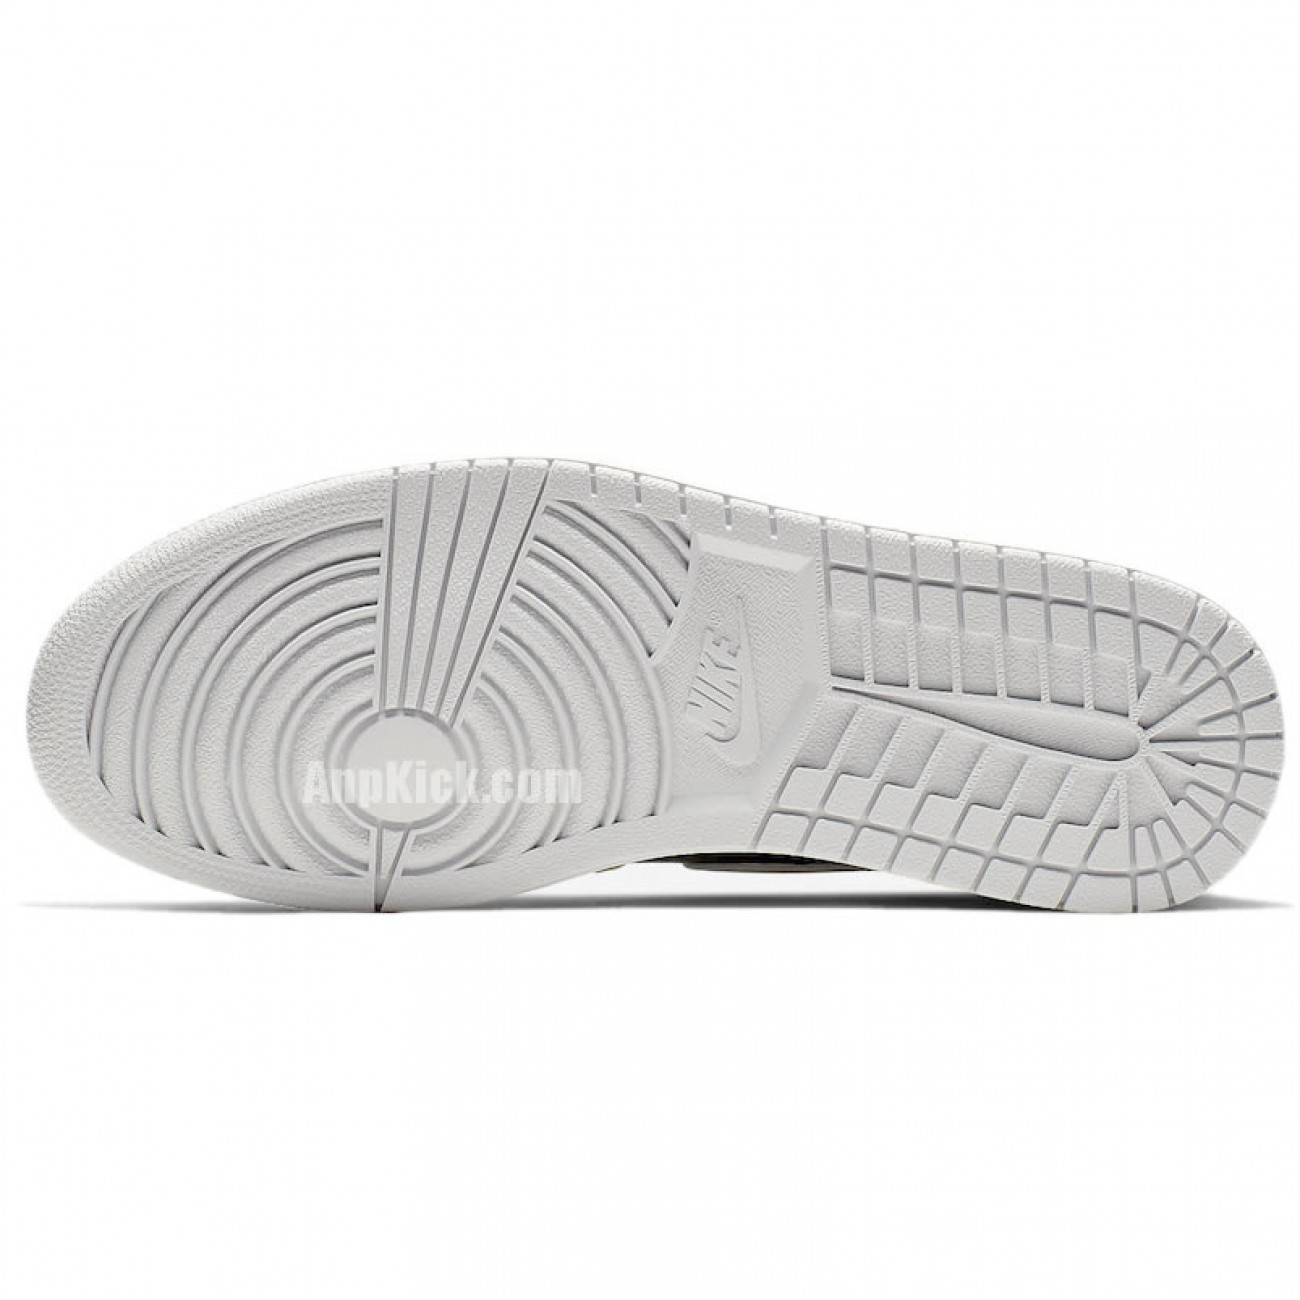 Air Jordan 1 Retro High OG "Neutral Grey" Shoes 555088-018